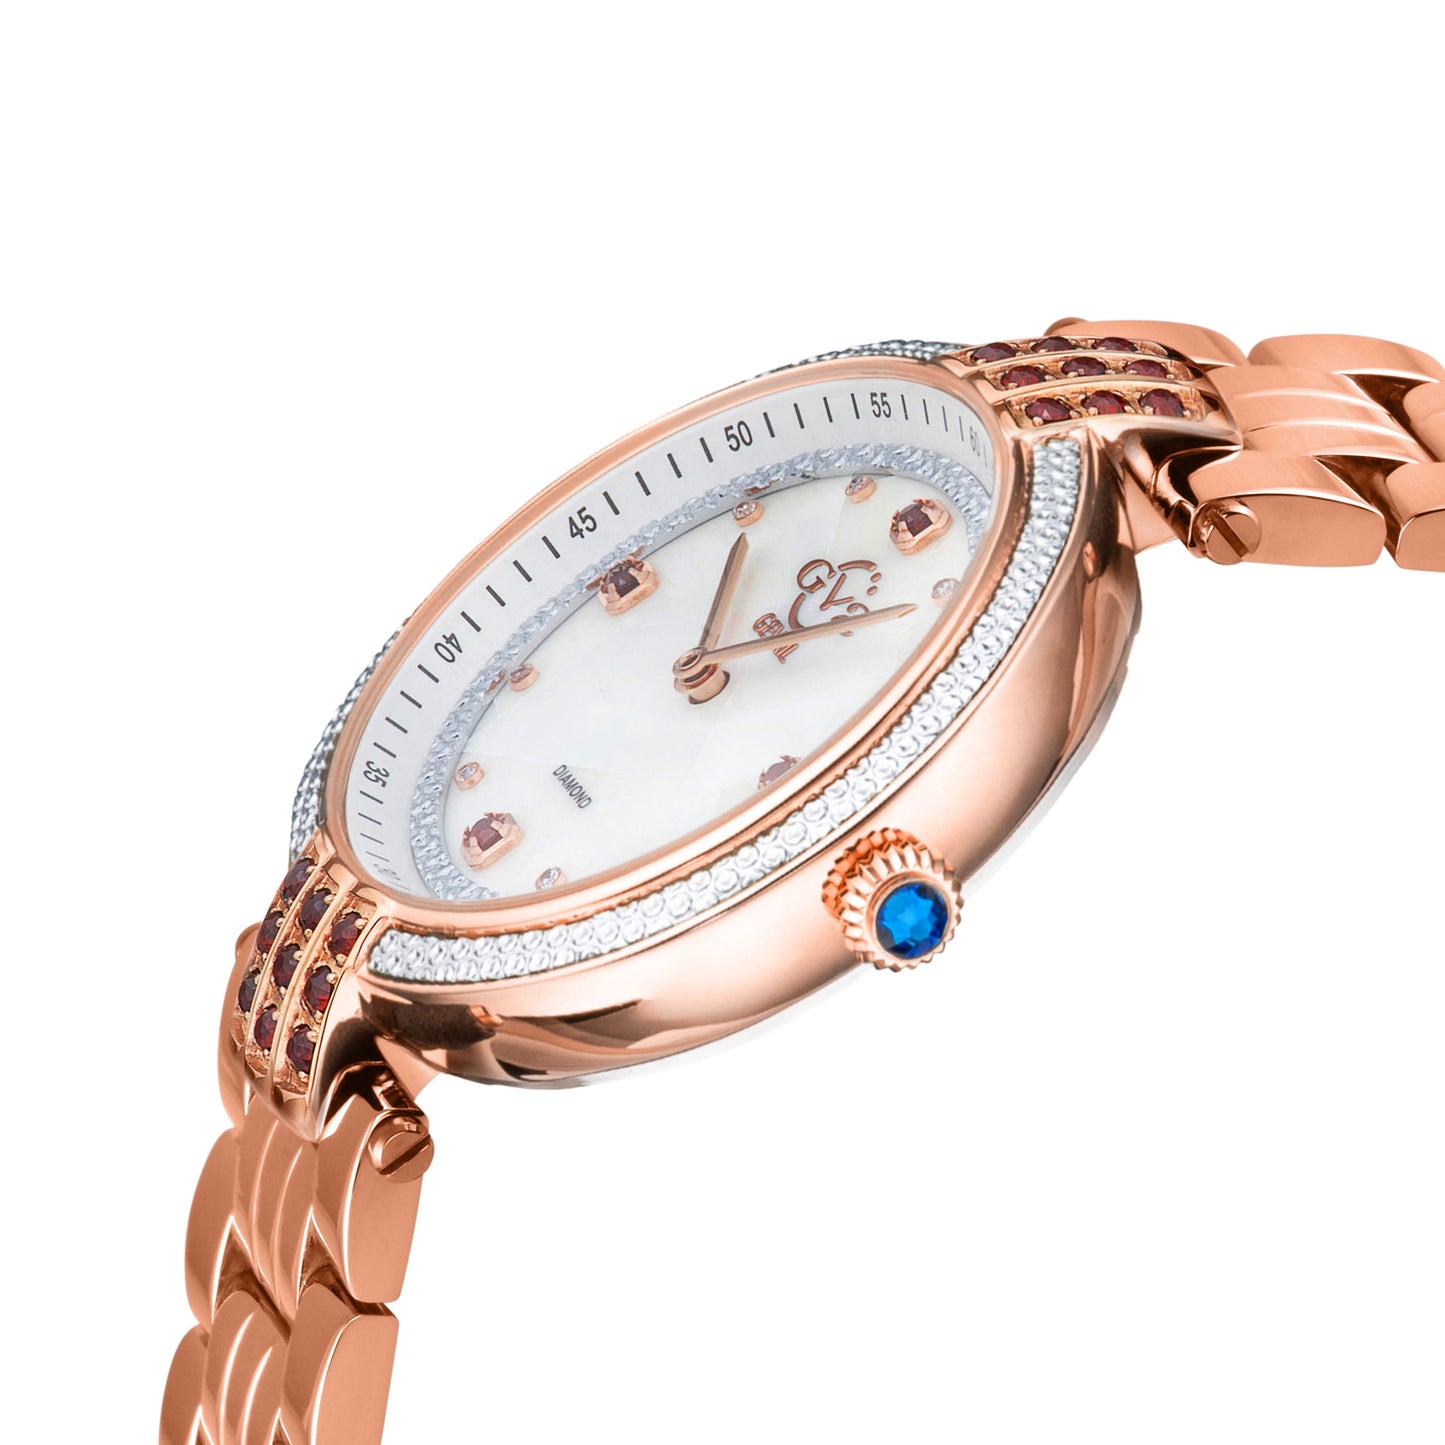 Gevril-Luxury-Swiss-Watches-GV2 Matera Diamond-12804B